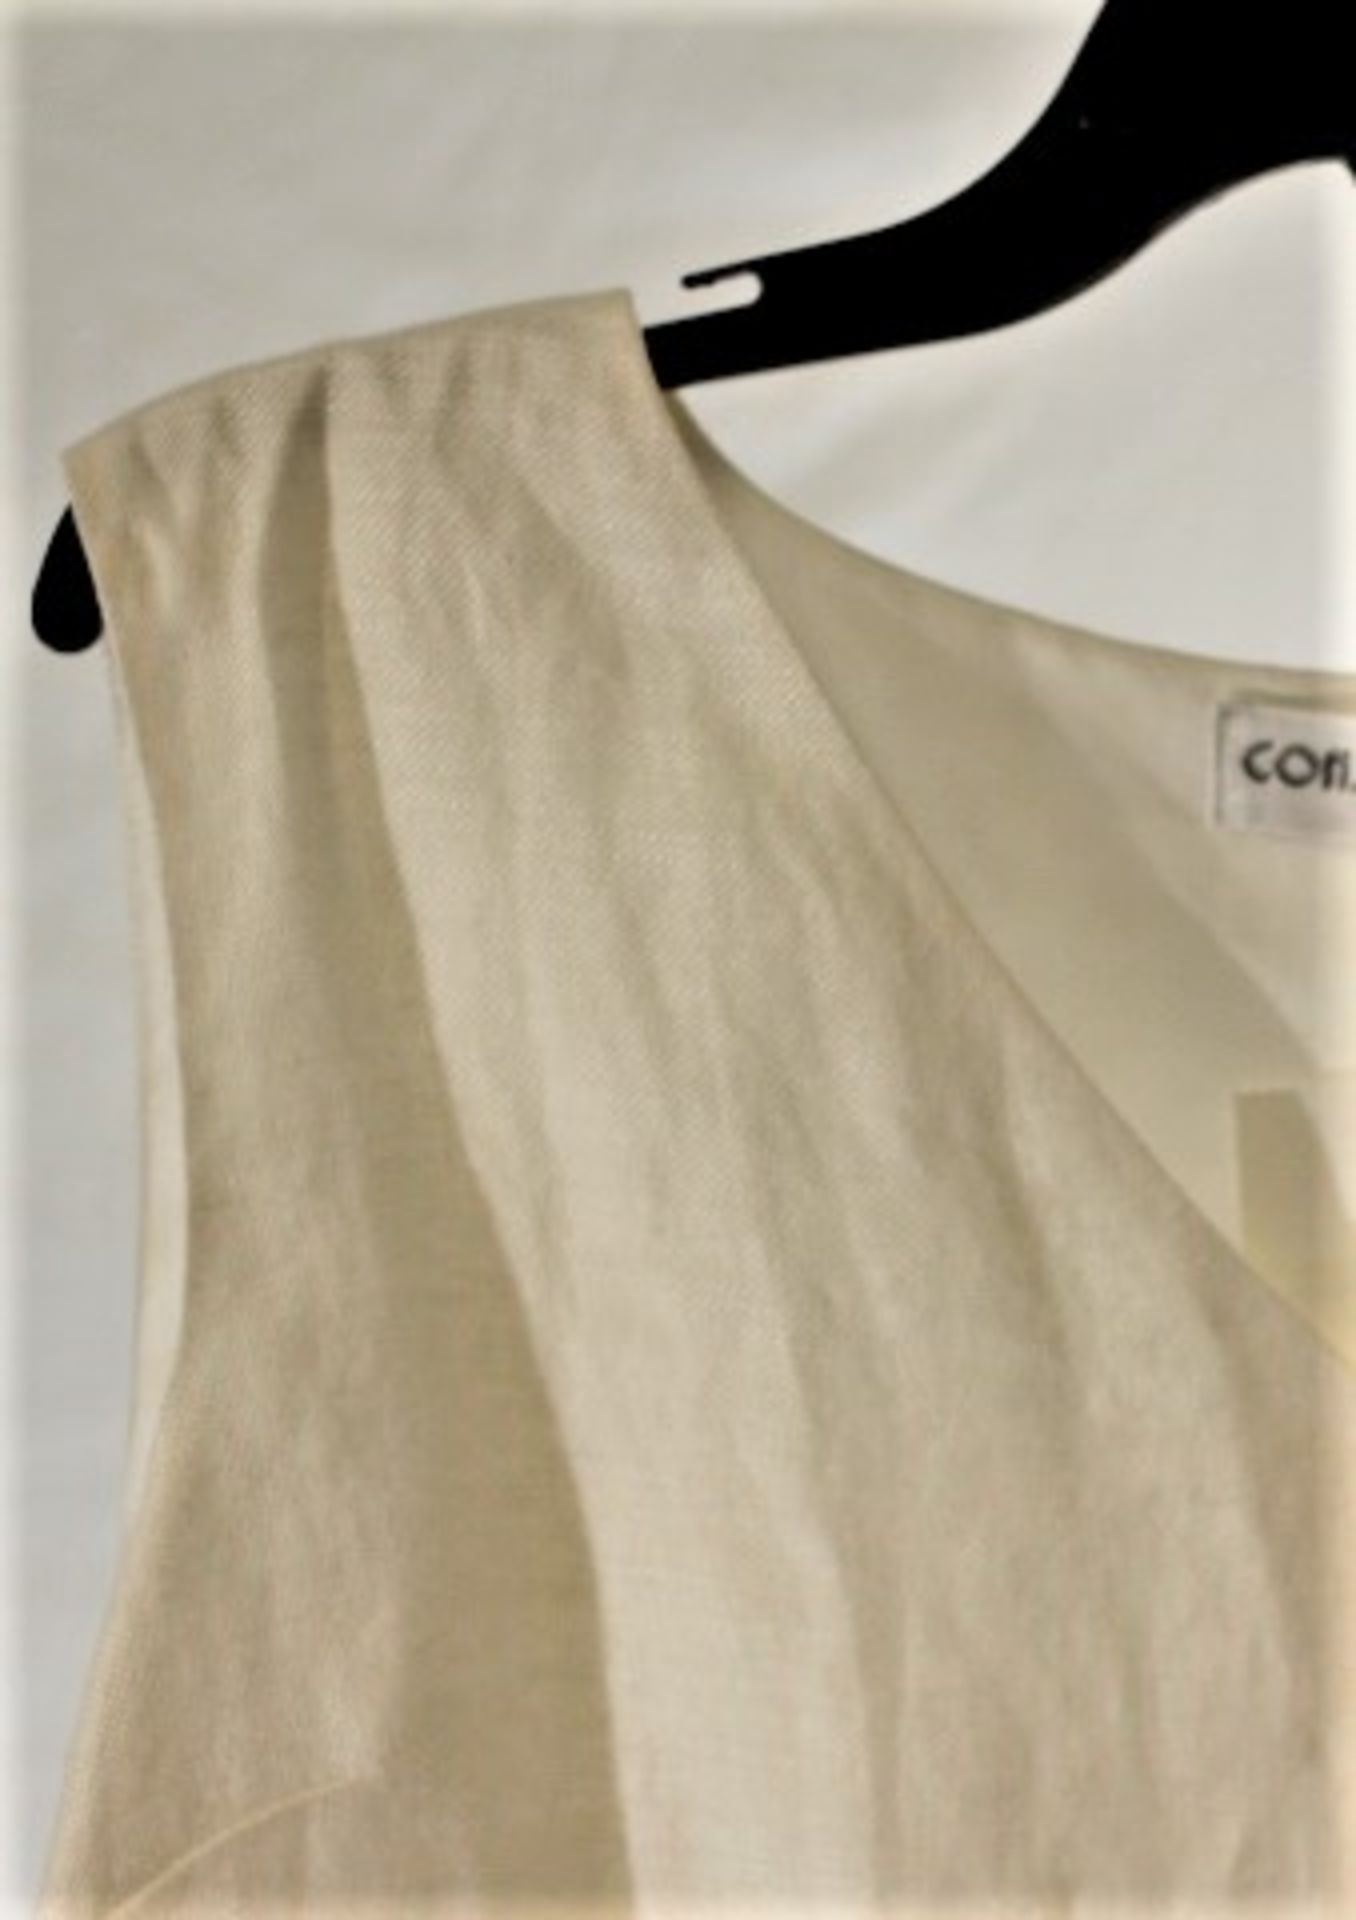 1 x Constantin Paris White Top - Size: 24 - Material: Acetate, Acrylic, Cotton, Fibre, Polyester, - Image 4 of 8